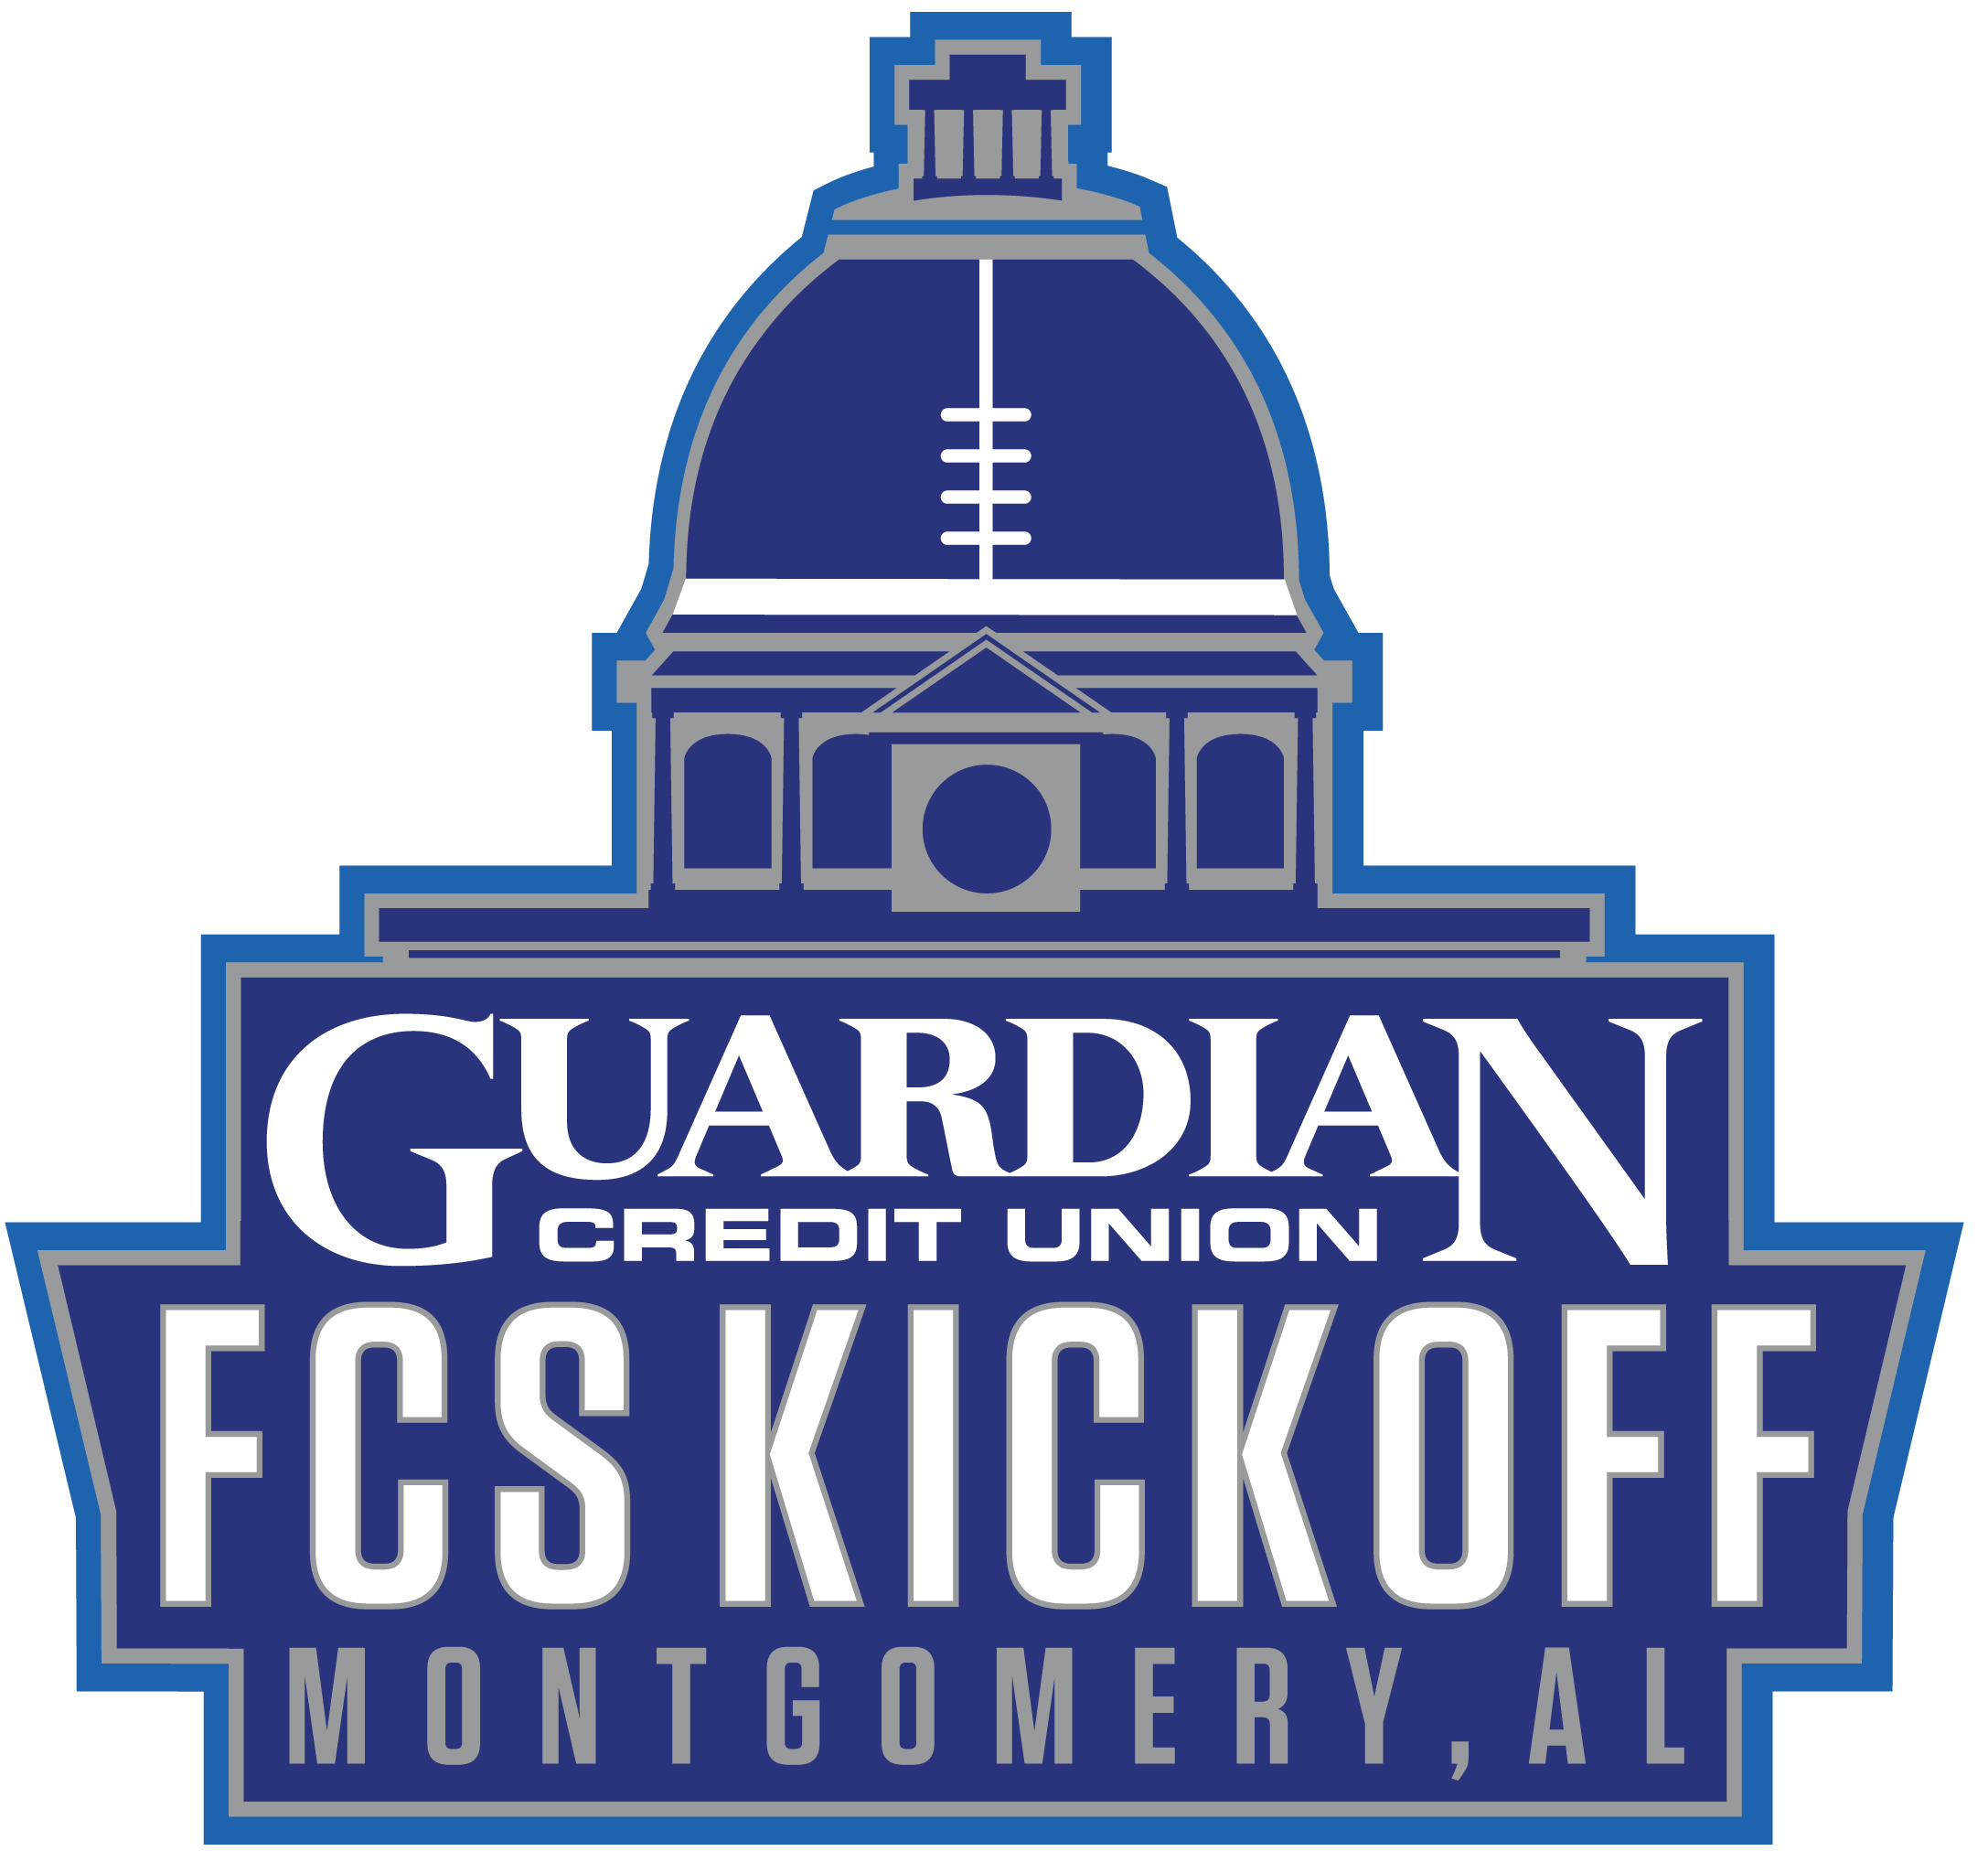 Guardian Credit Union FCS Kickoff | Montgomery, AL | ESPN Events